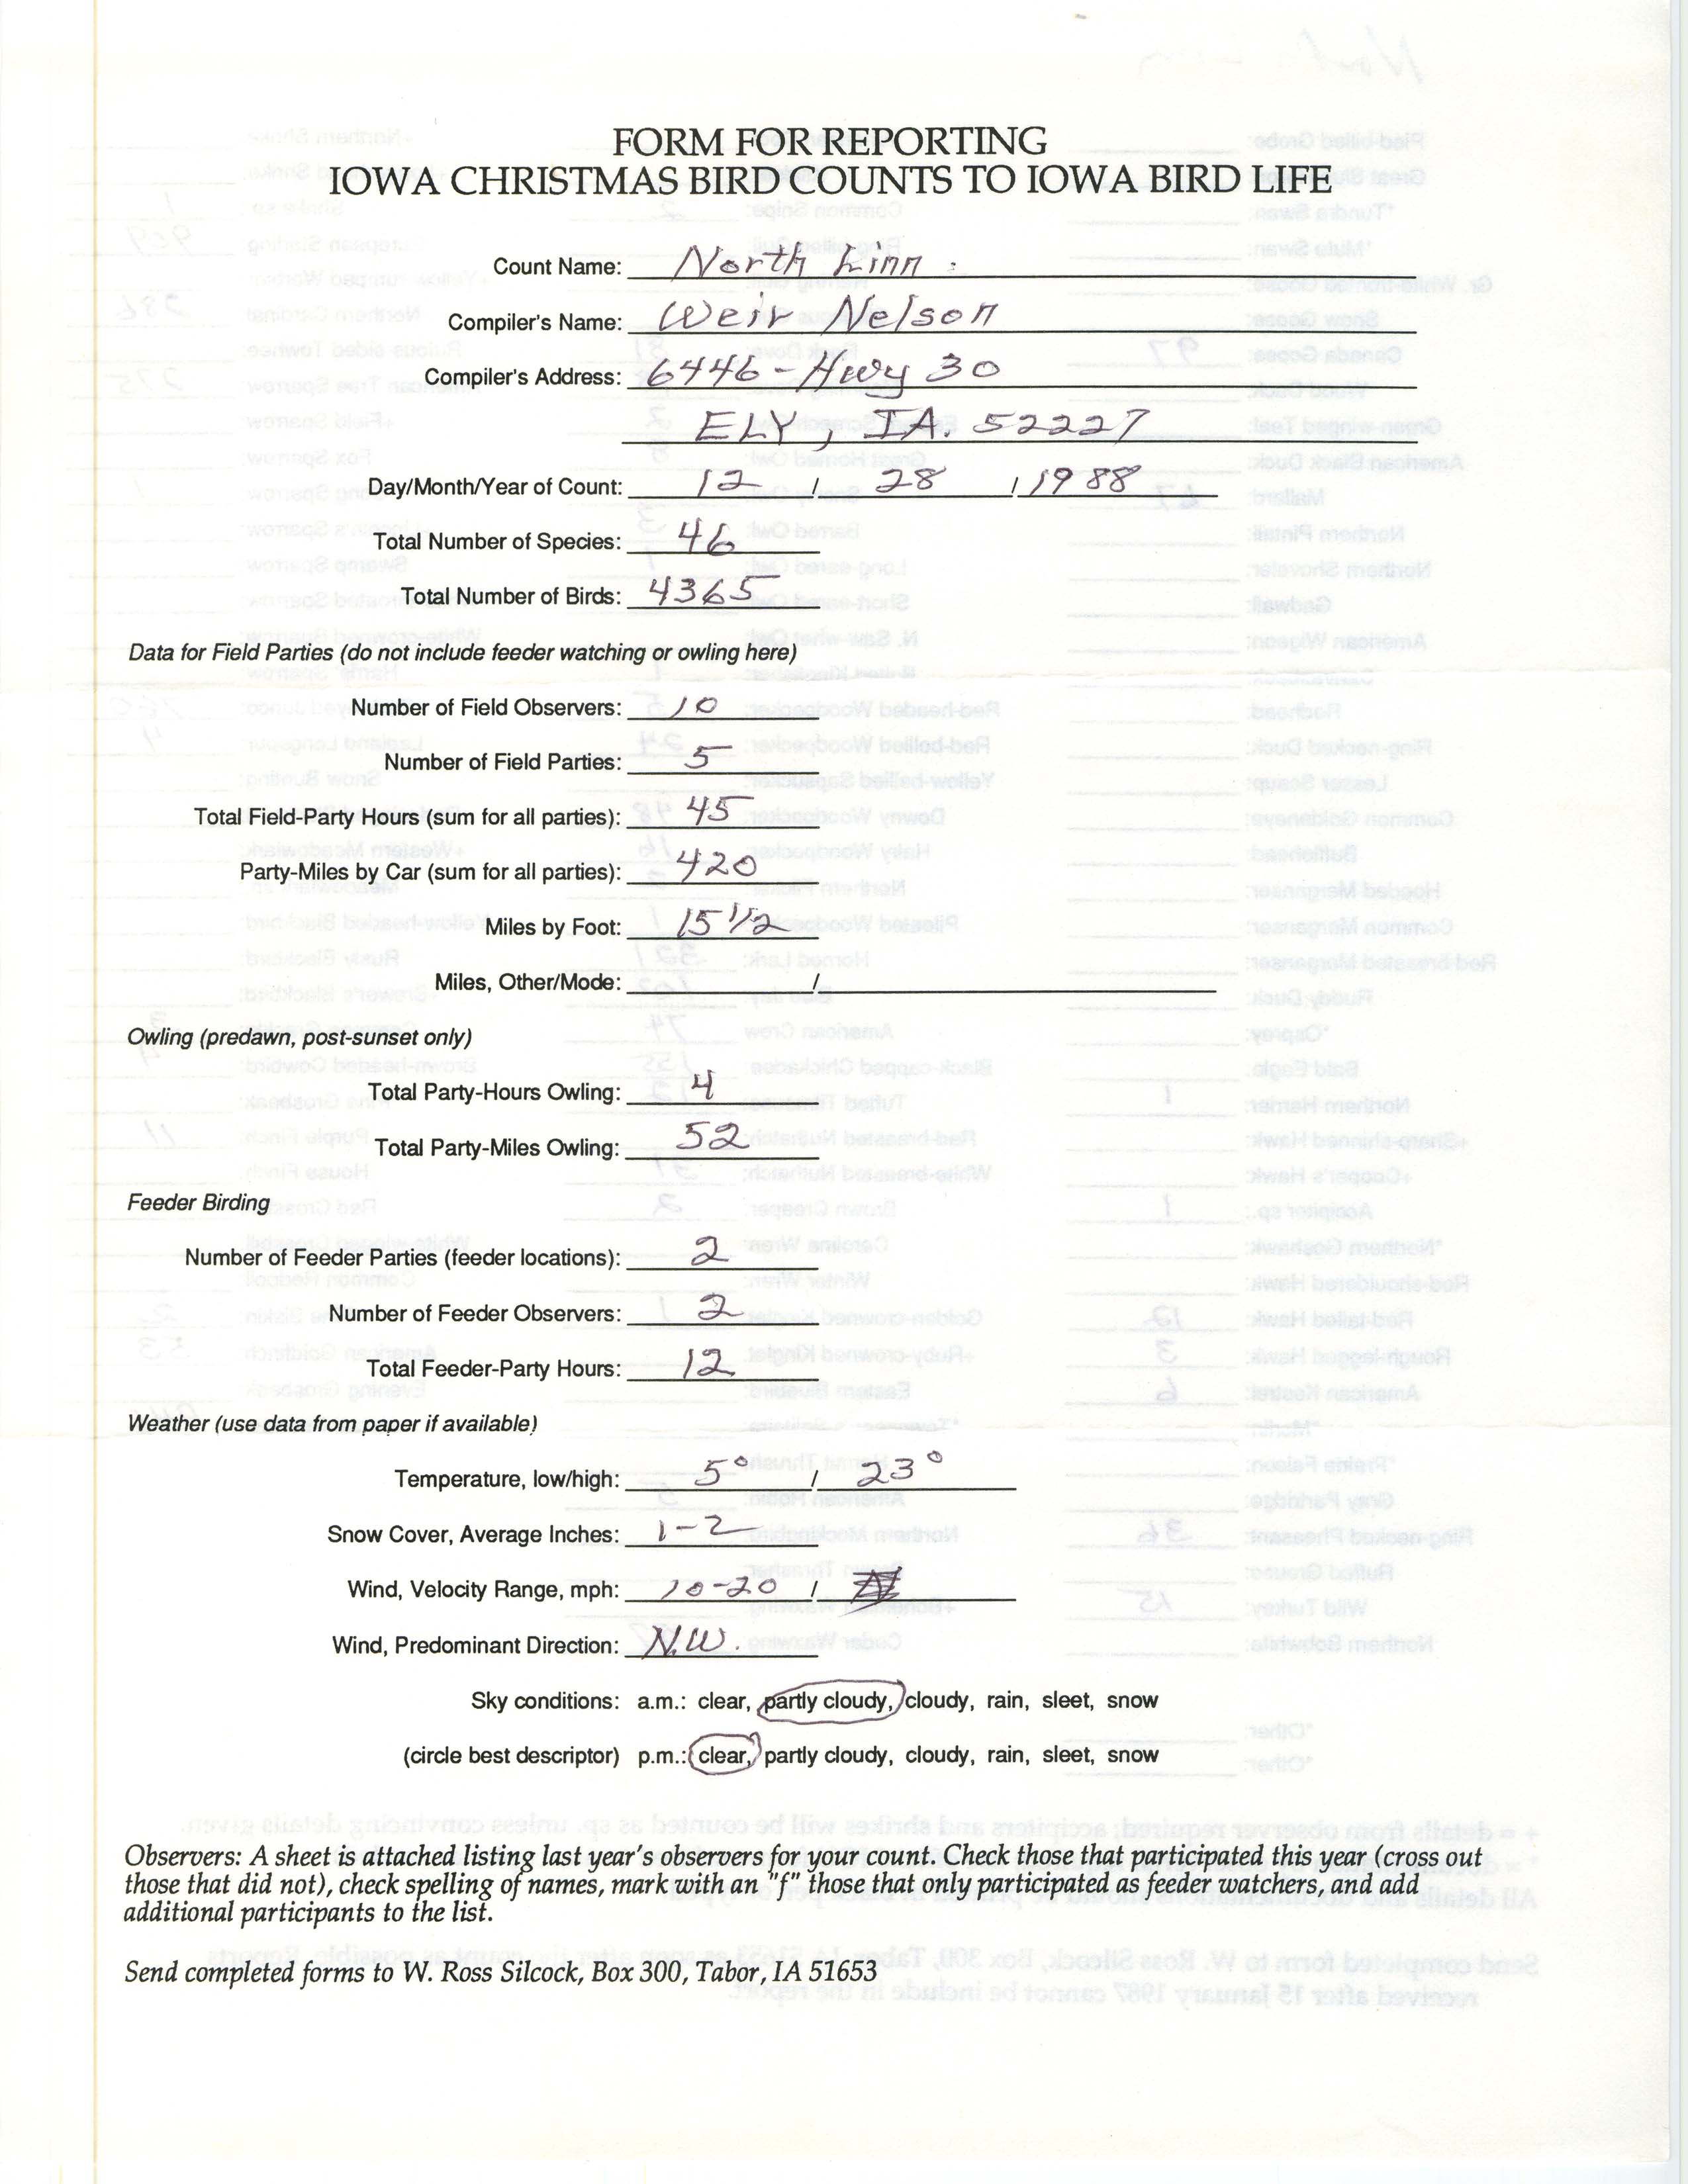 Form for reporting Iowa Christmas bird counts to Iowa Bird Life, Weir Nelson, December 28, 1988